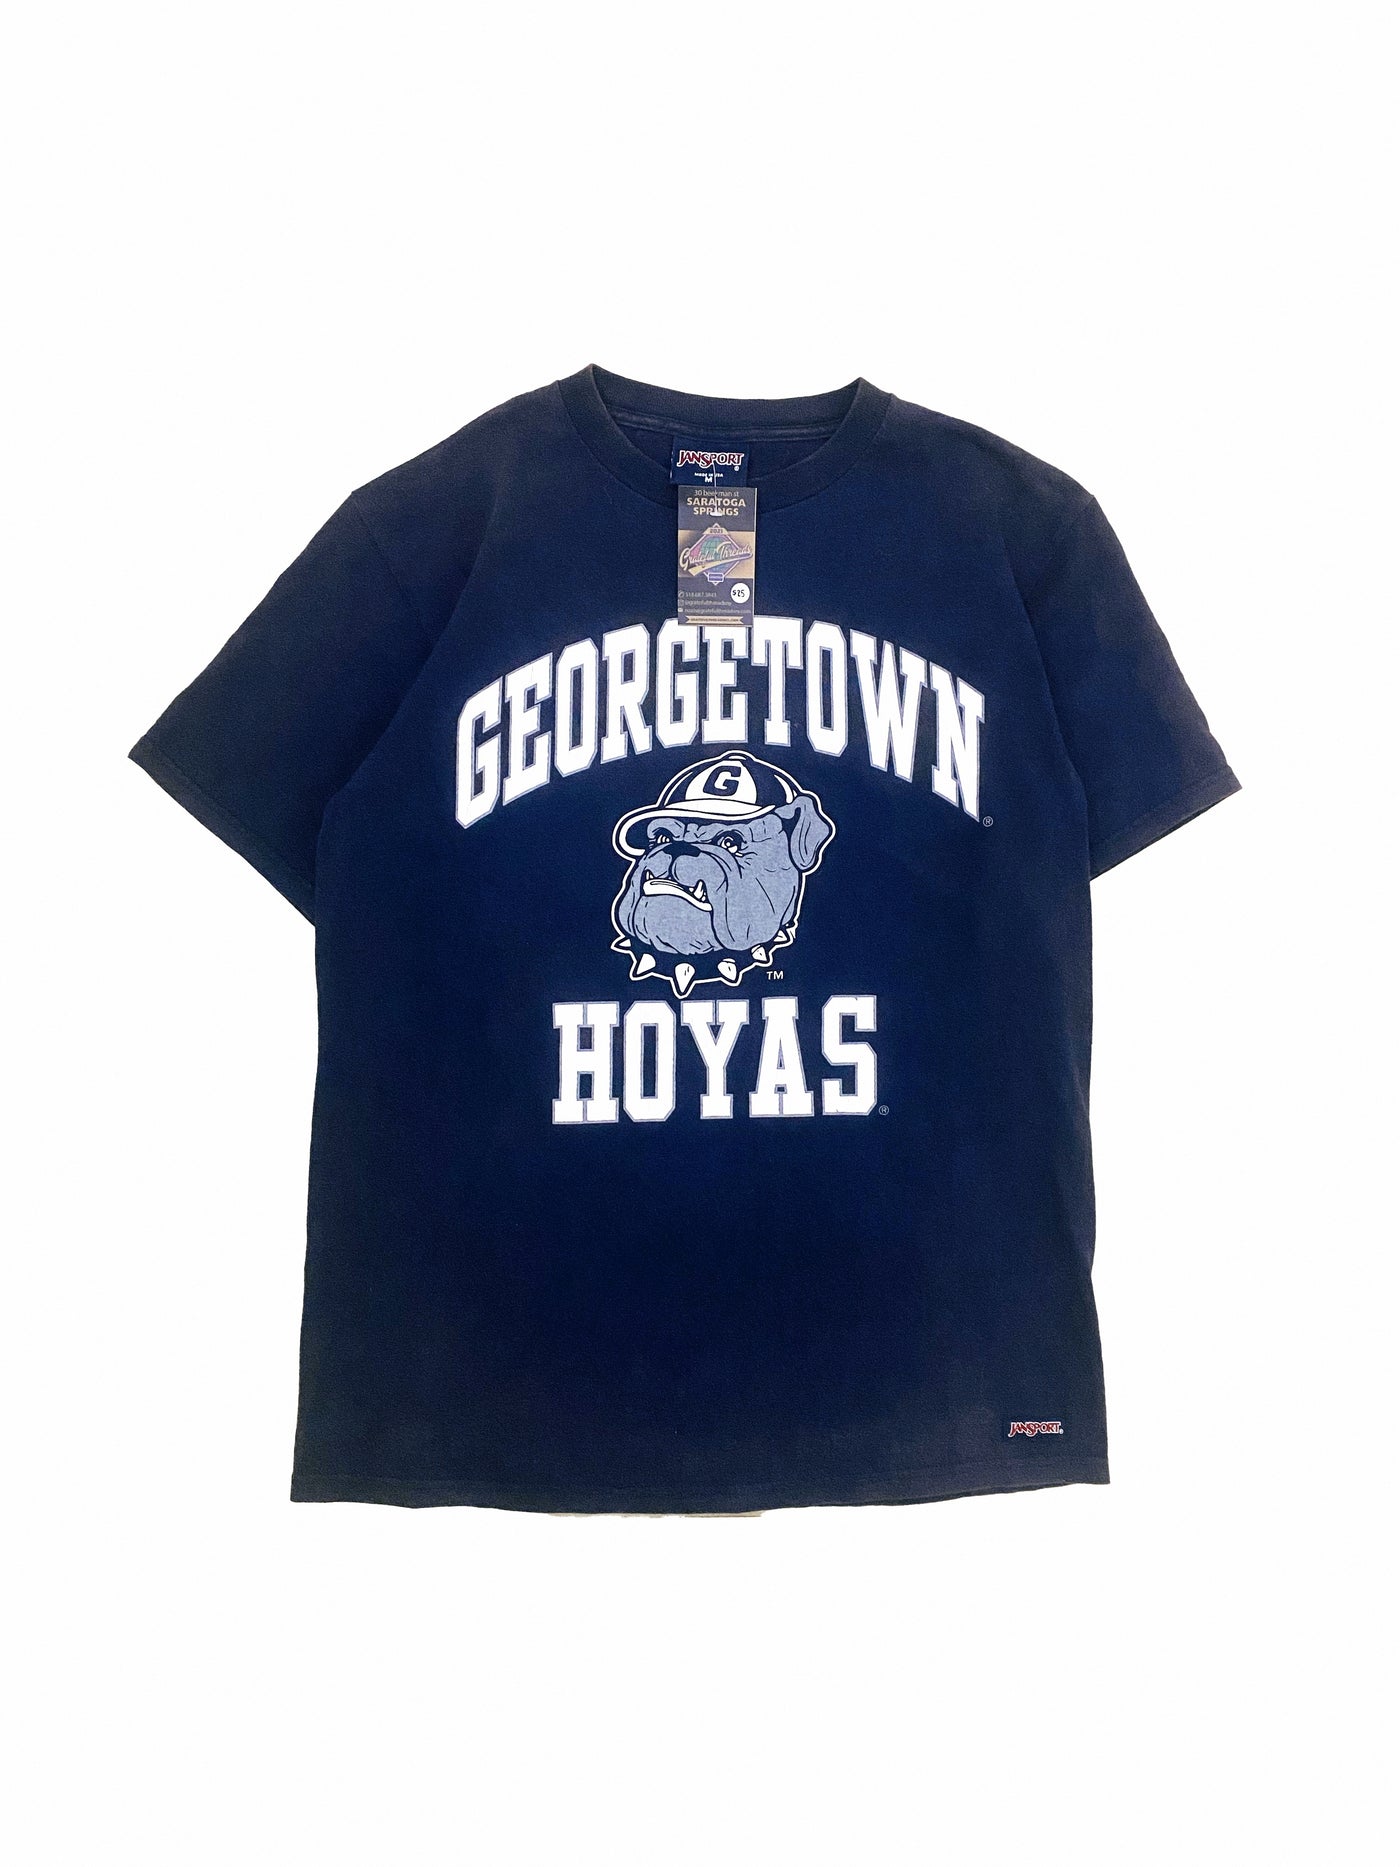 Vintage Georgetown Hoyas Spellout T-Shirt